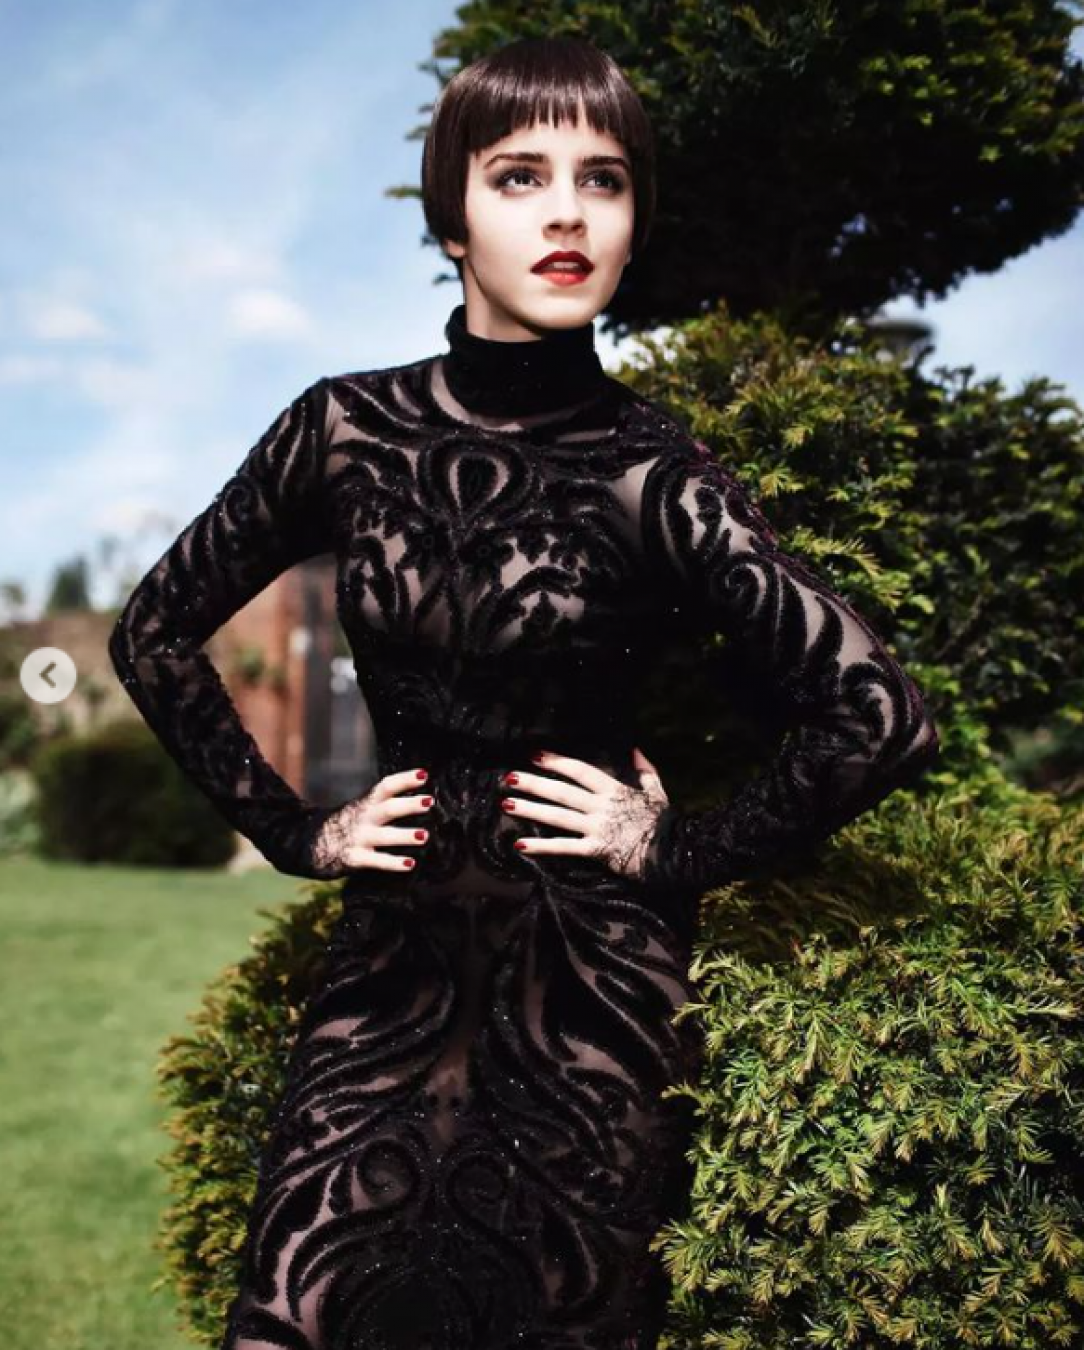 Emma in a black sheer dress